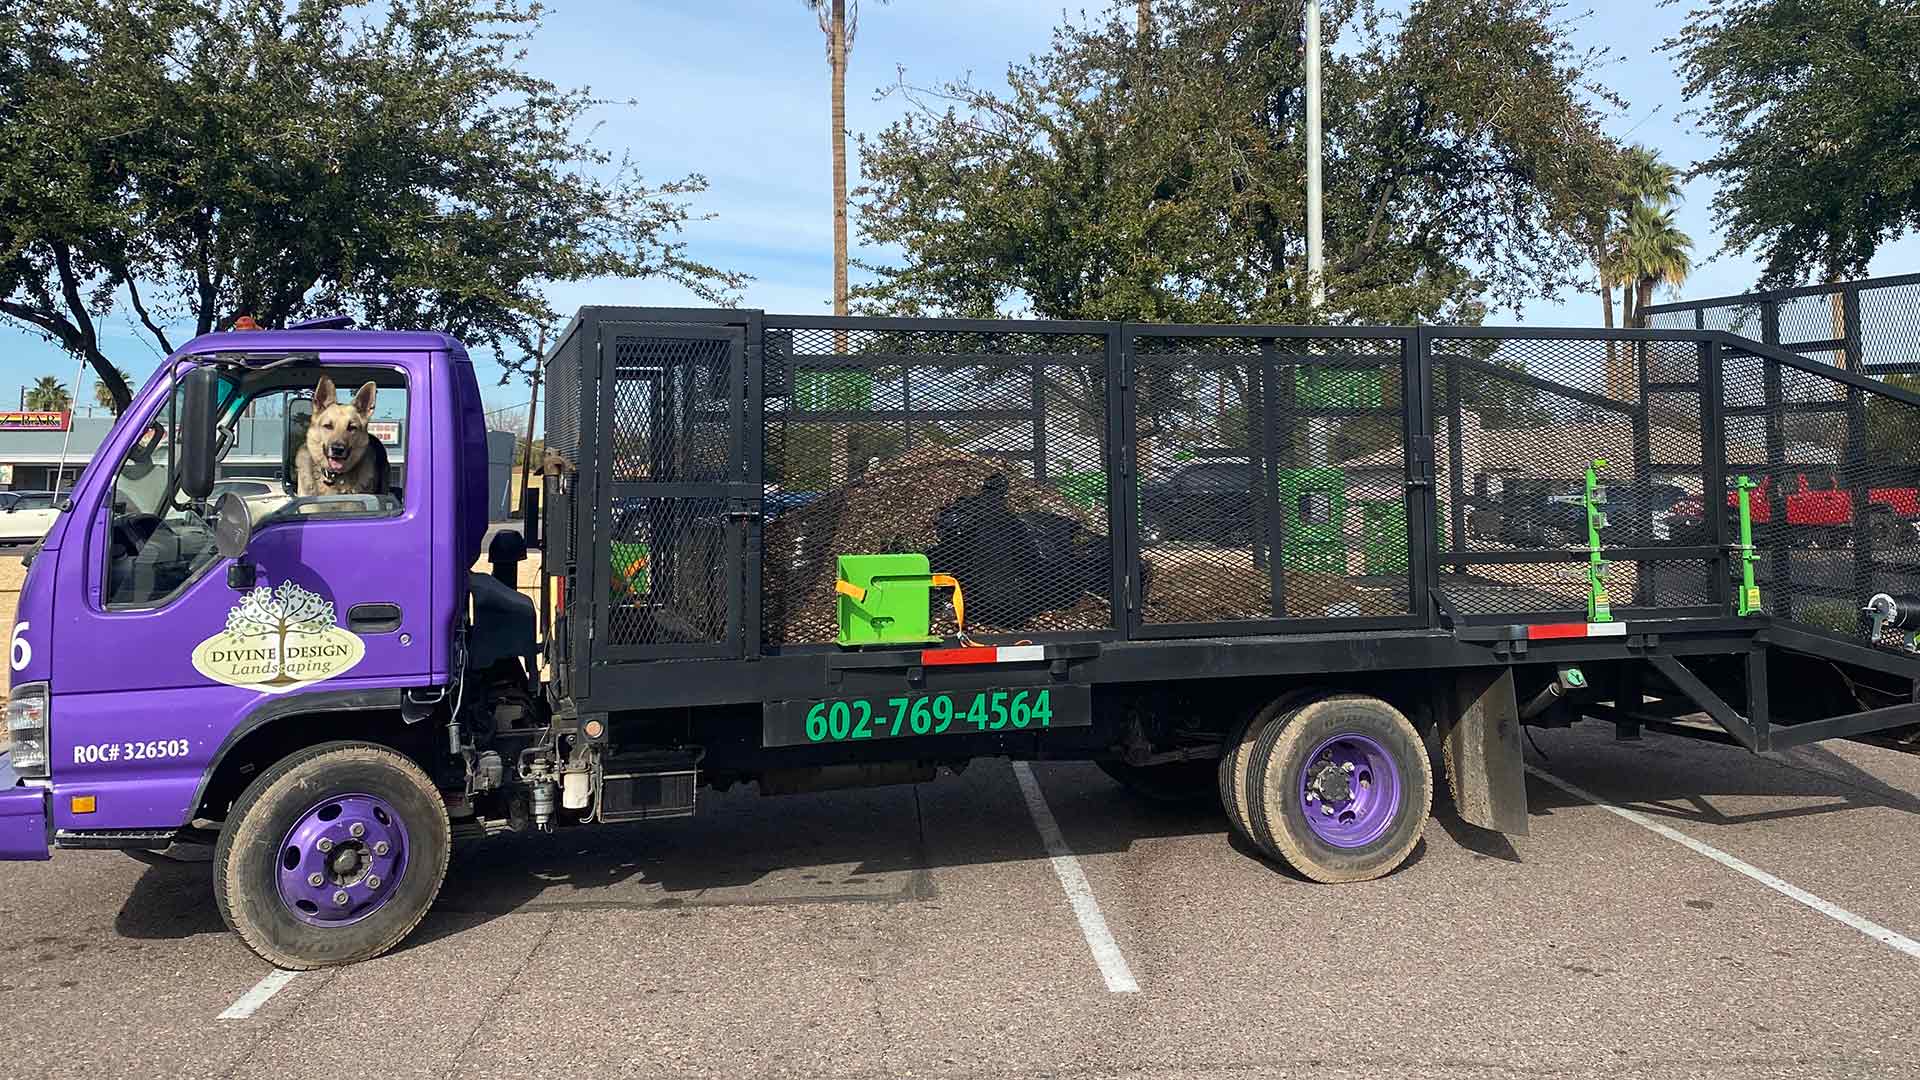 Branding truck parked with dog posing in Phoenix, AZ.